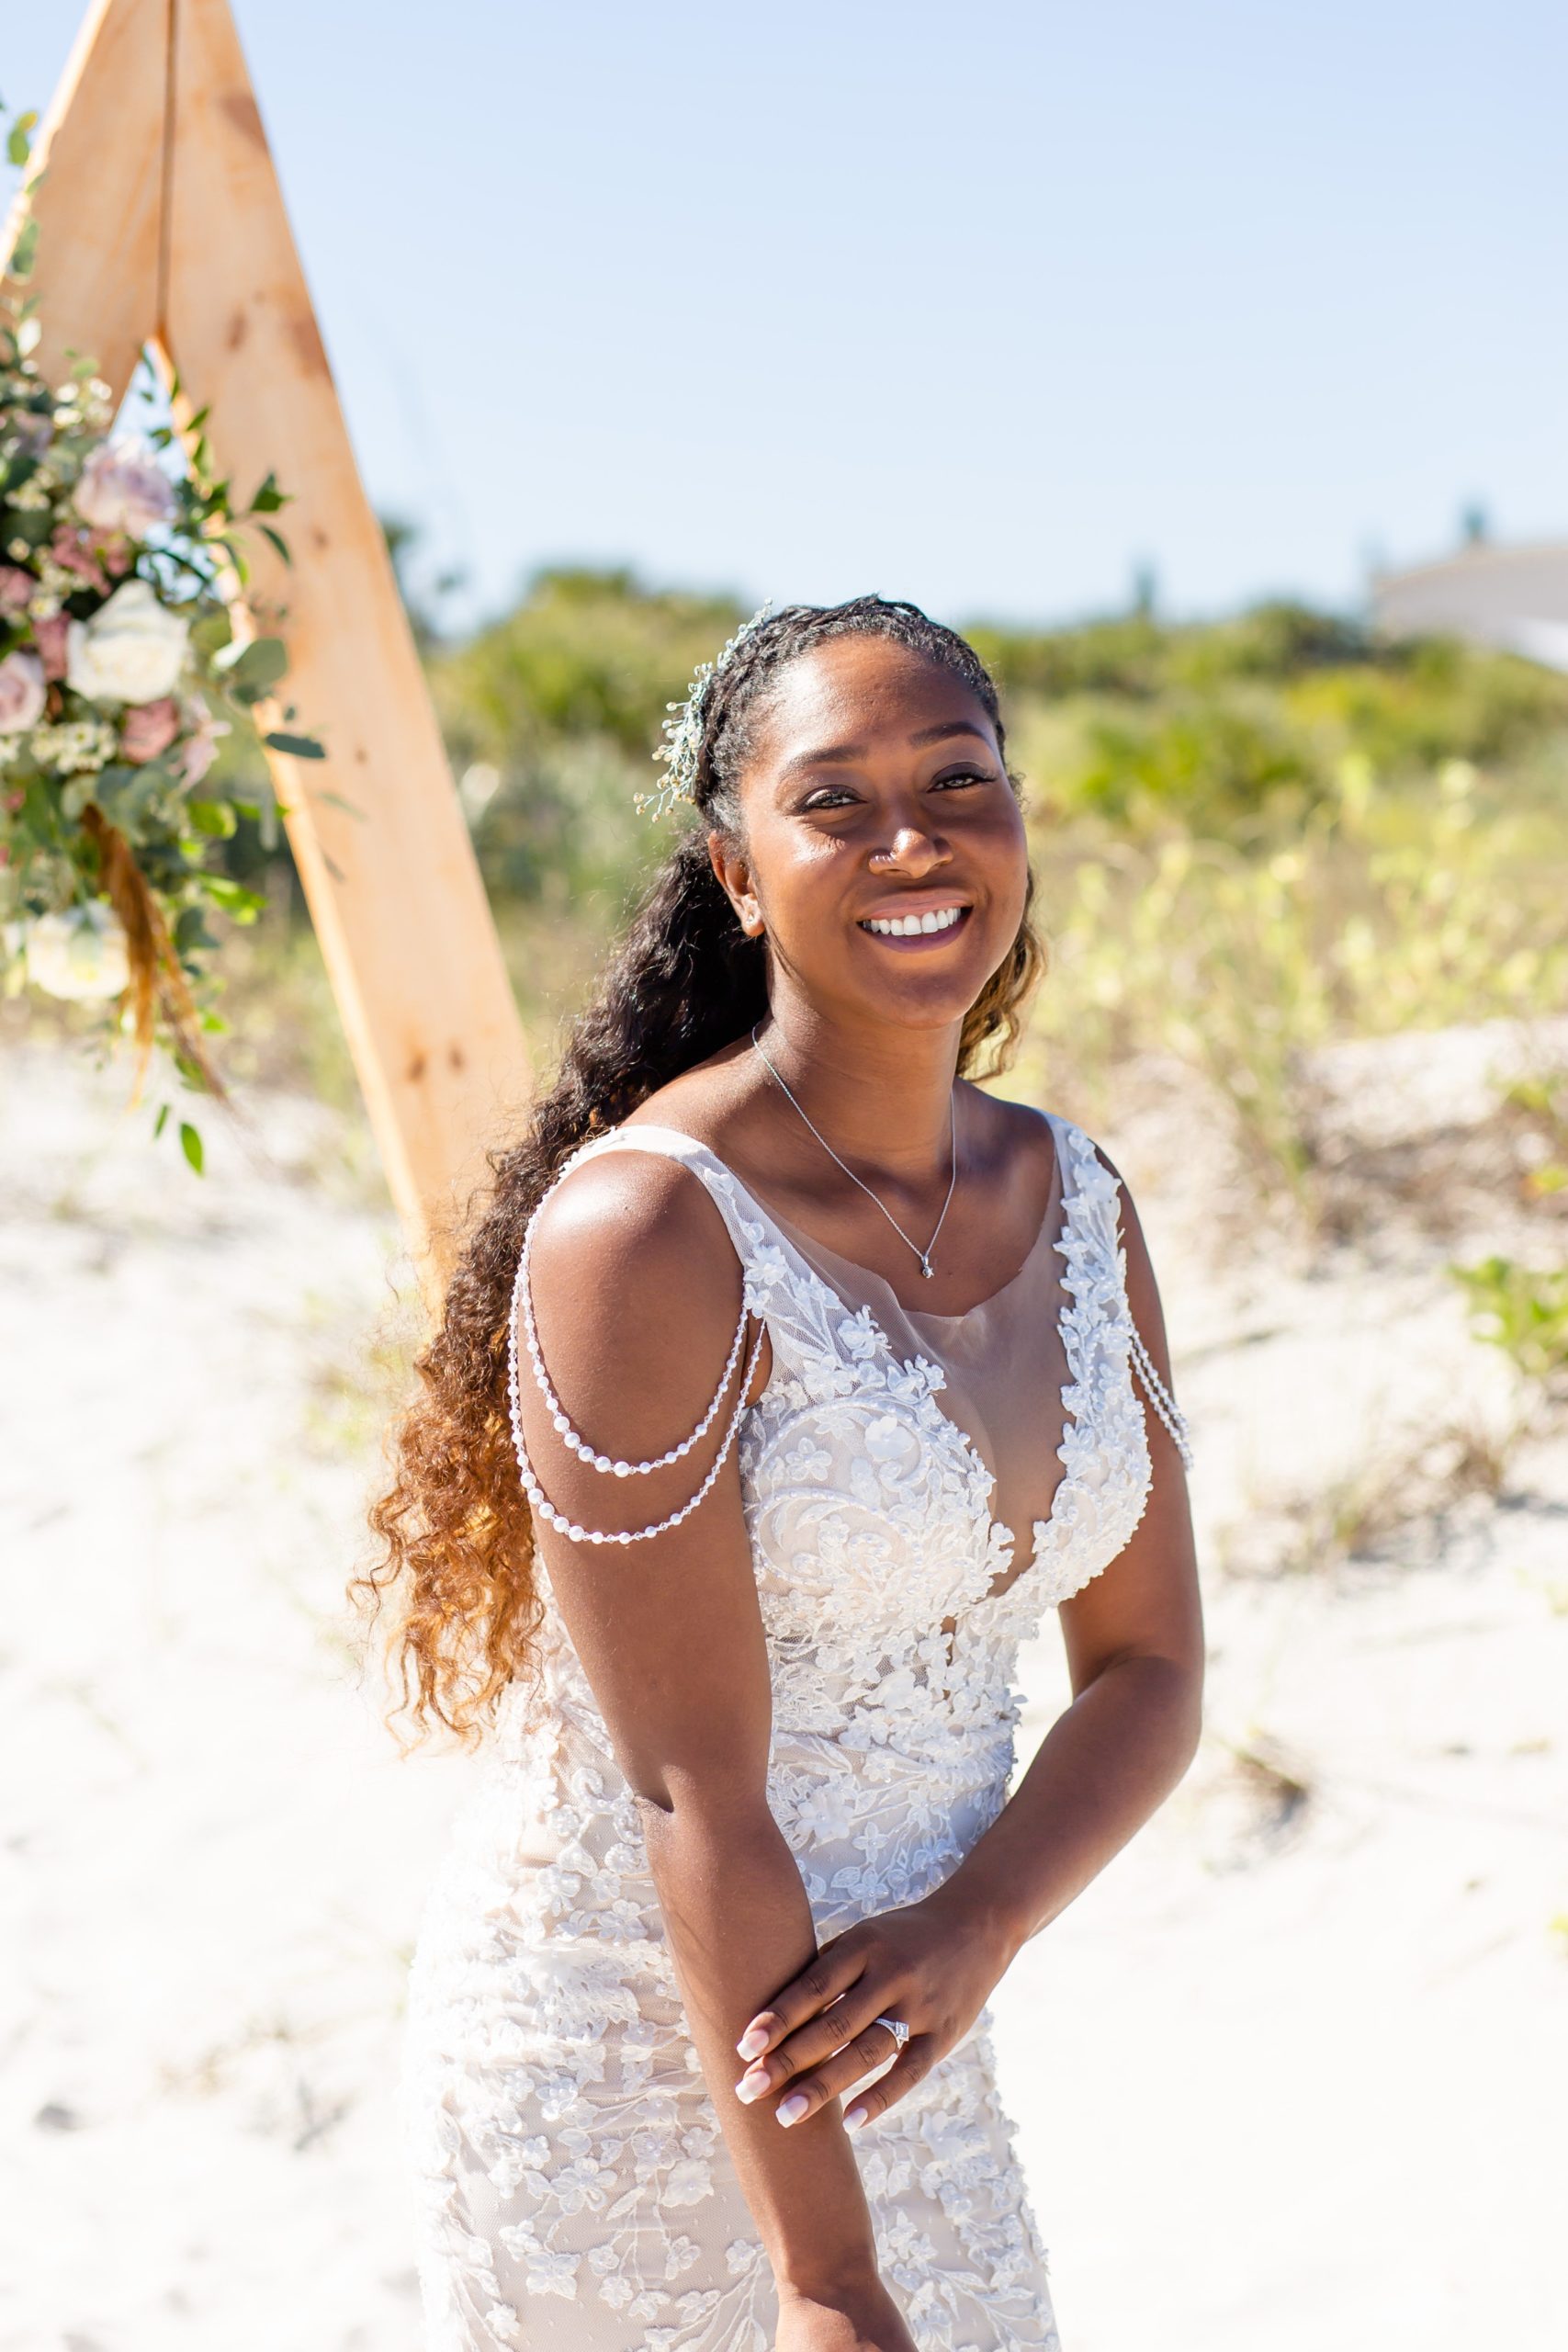 The bride for this Florida beach wedding